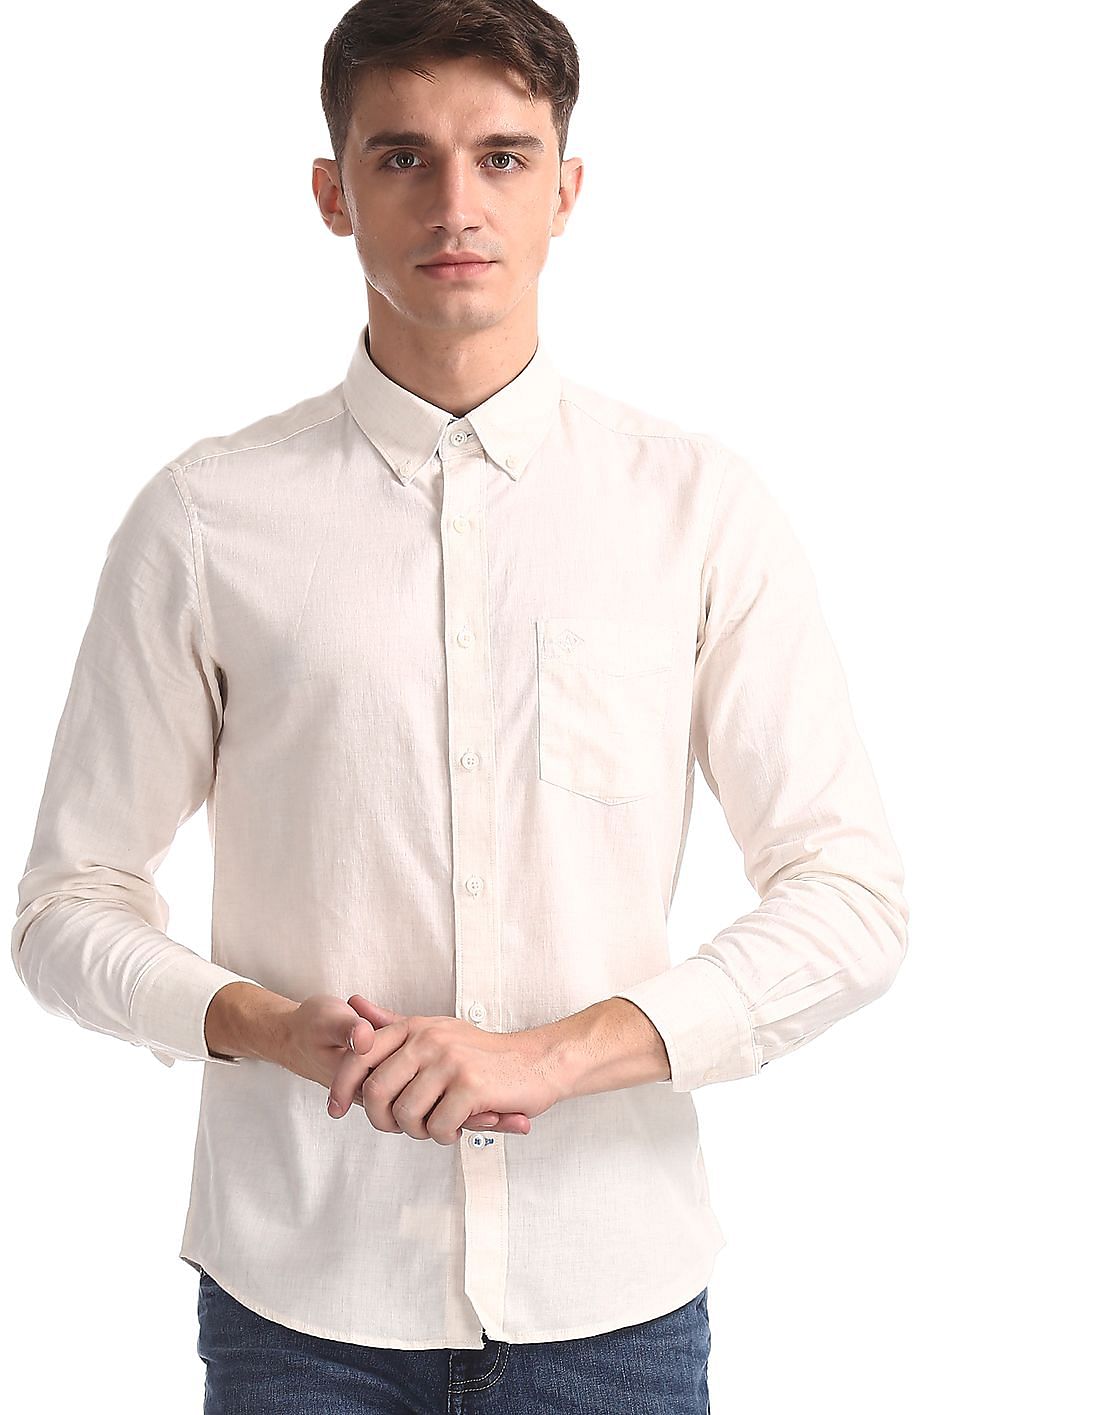 Buy Arrow Sports White Button Down Collar Slim Fit Shirt - NNNOW.com